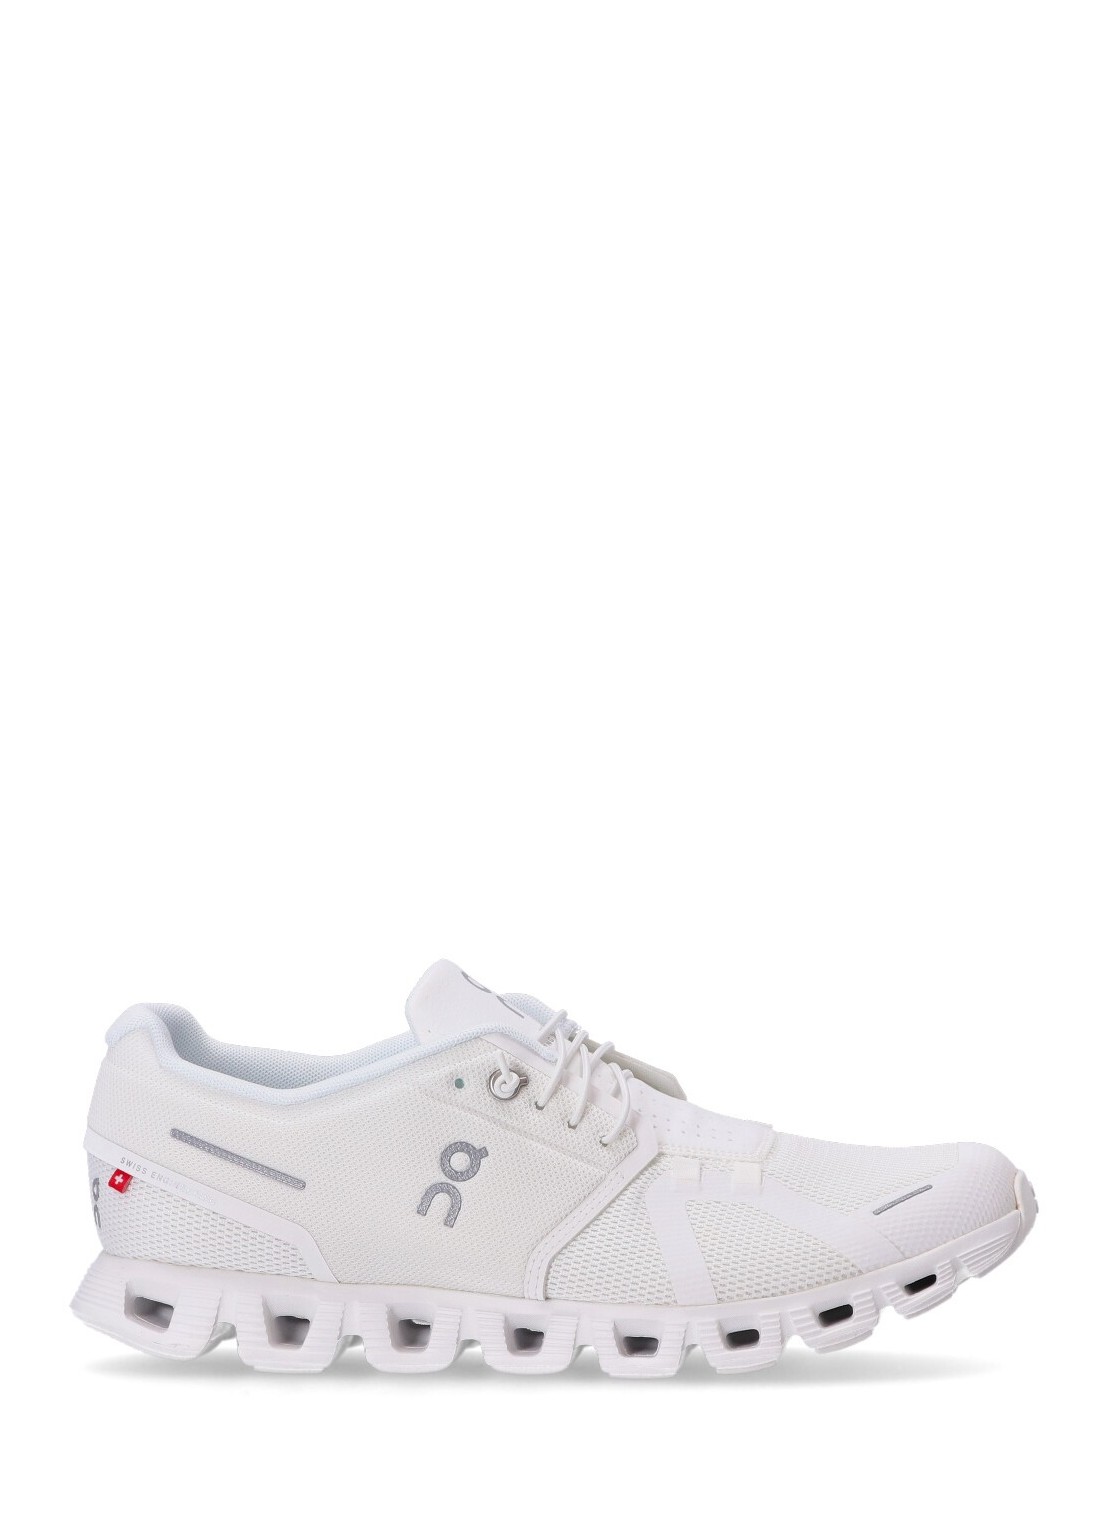 Sneaker on running sneaker man cloud 5 5998376 undyed white white talla 43
 